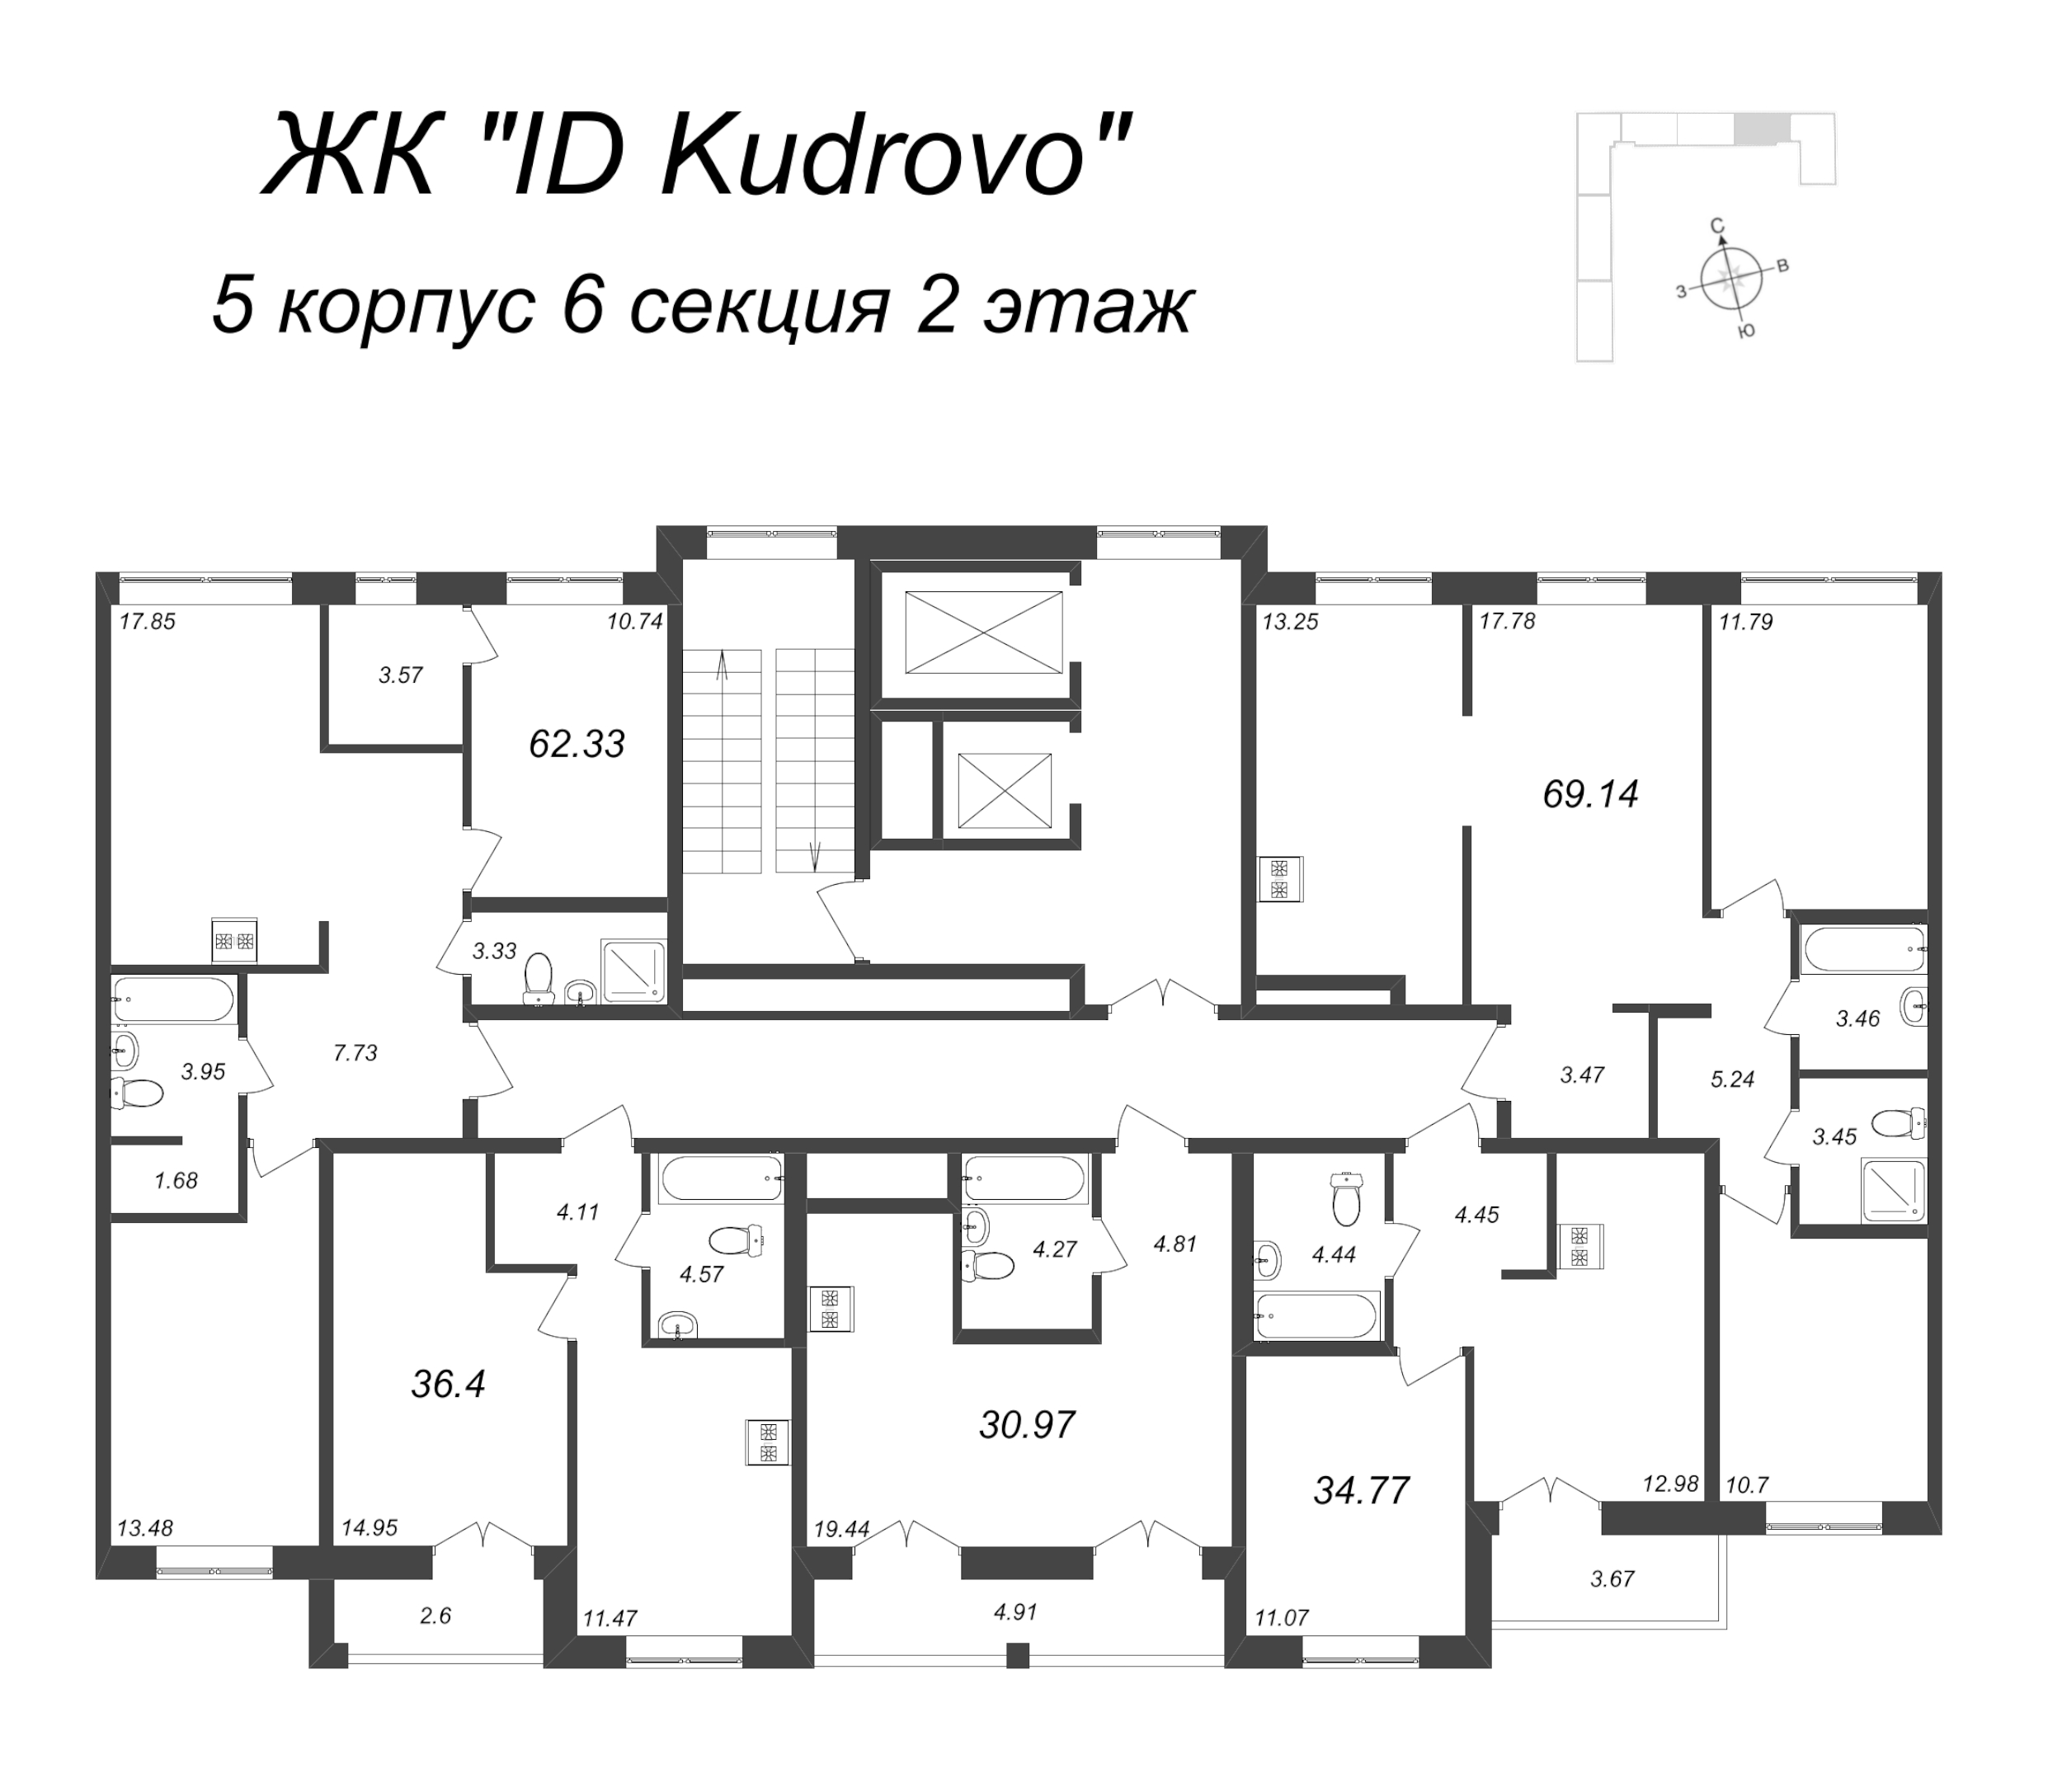 3-комнатная квартира, 69.14 м² в ЖК "ID Kudrovo" - планировка этажа